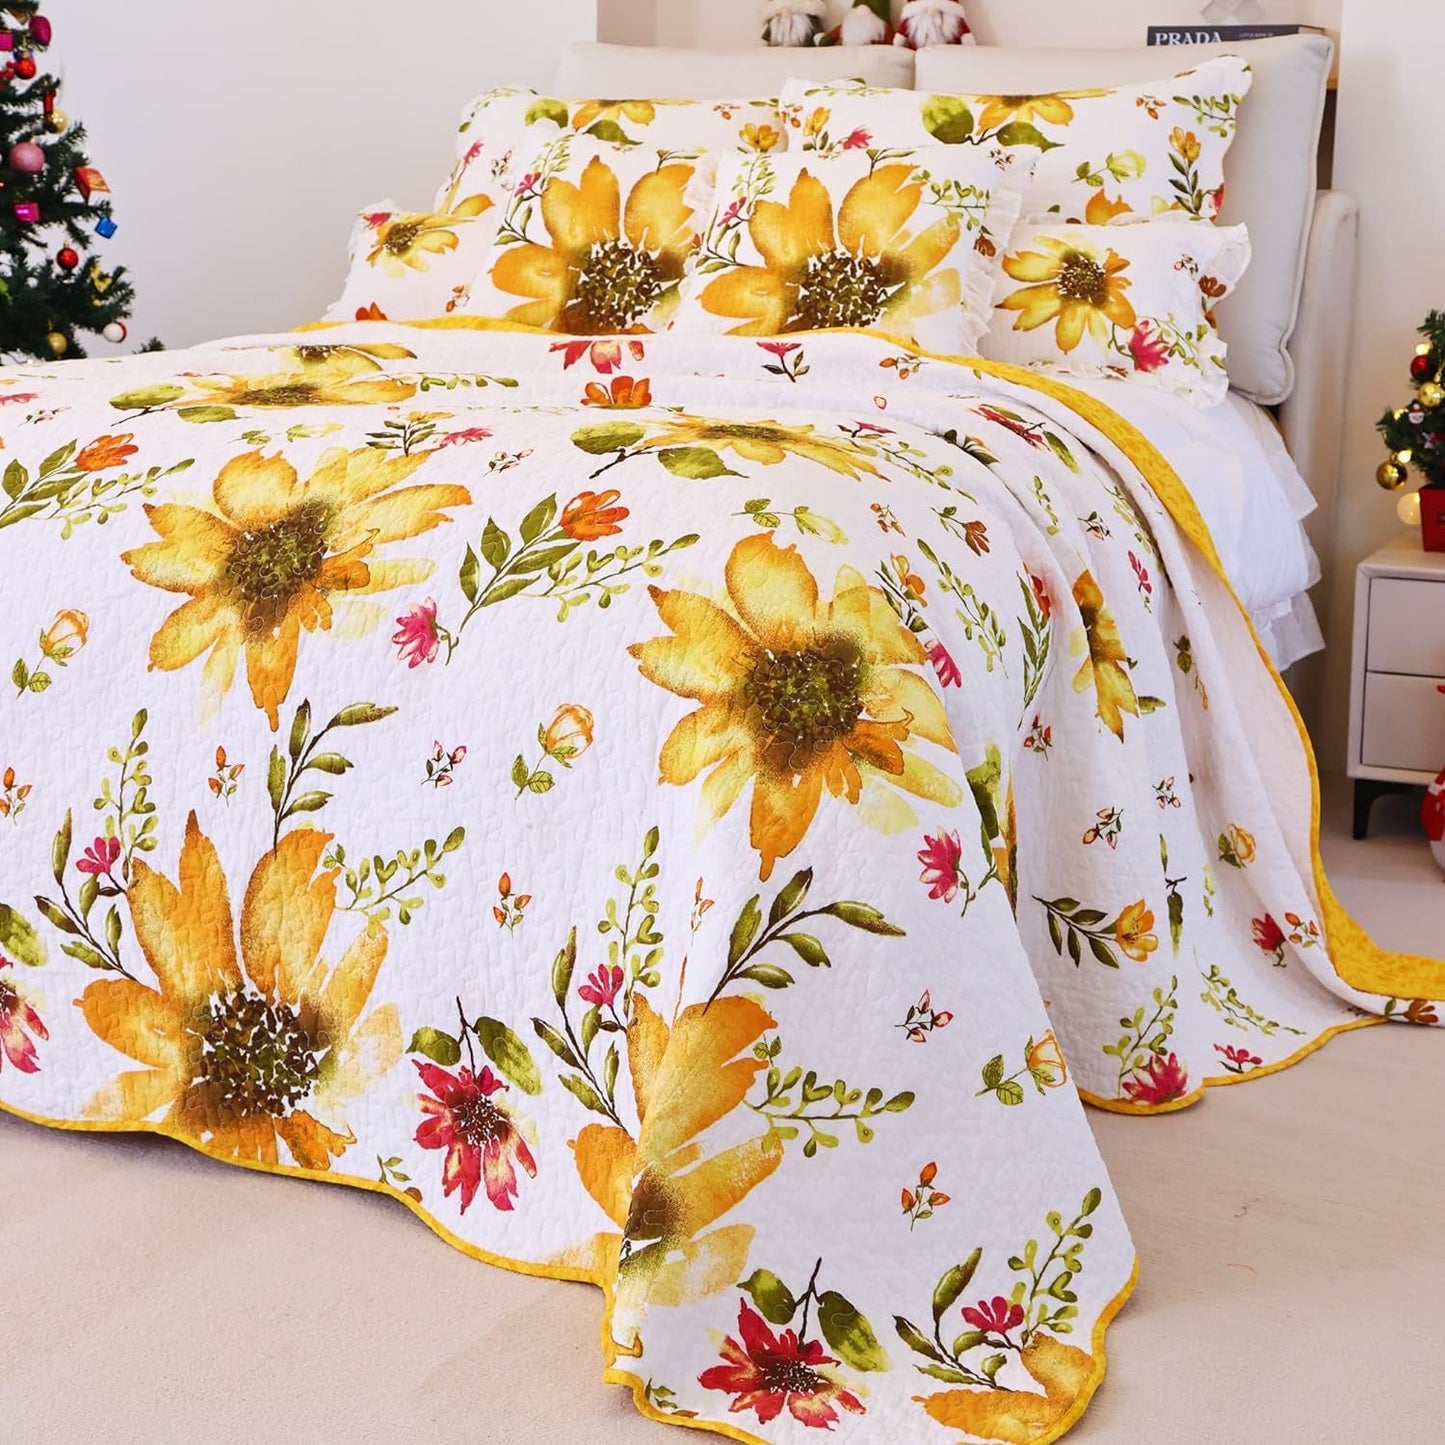 EVENHUG 100% Cotton Quilt Queen Size Orange Sunflower Bedding Set Floral Lightweight Quilt Reversible Coverlet Bedspread with 2 Pillow Shams All Seasons 3 Pieces (92"X96")